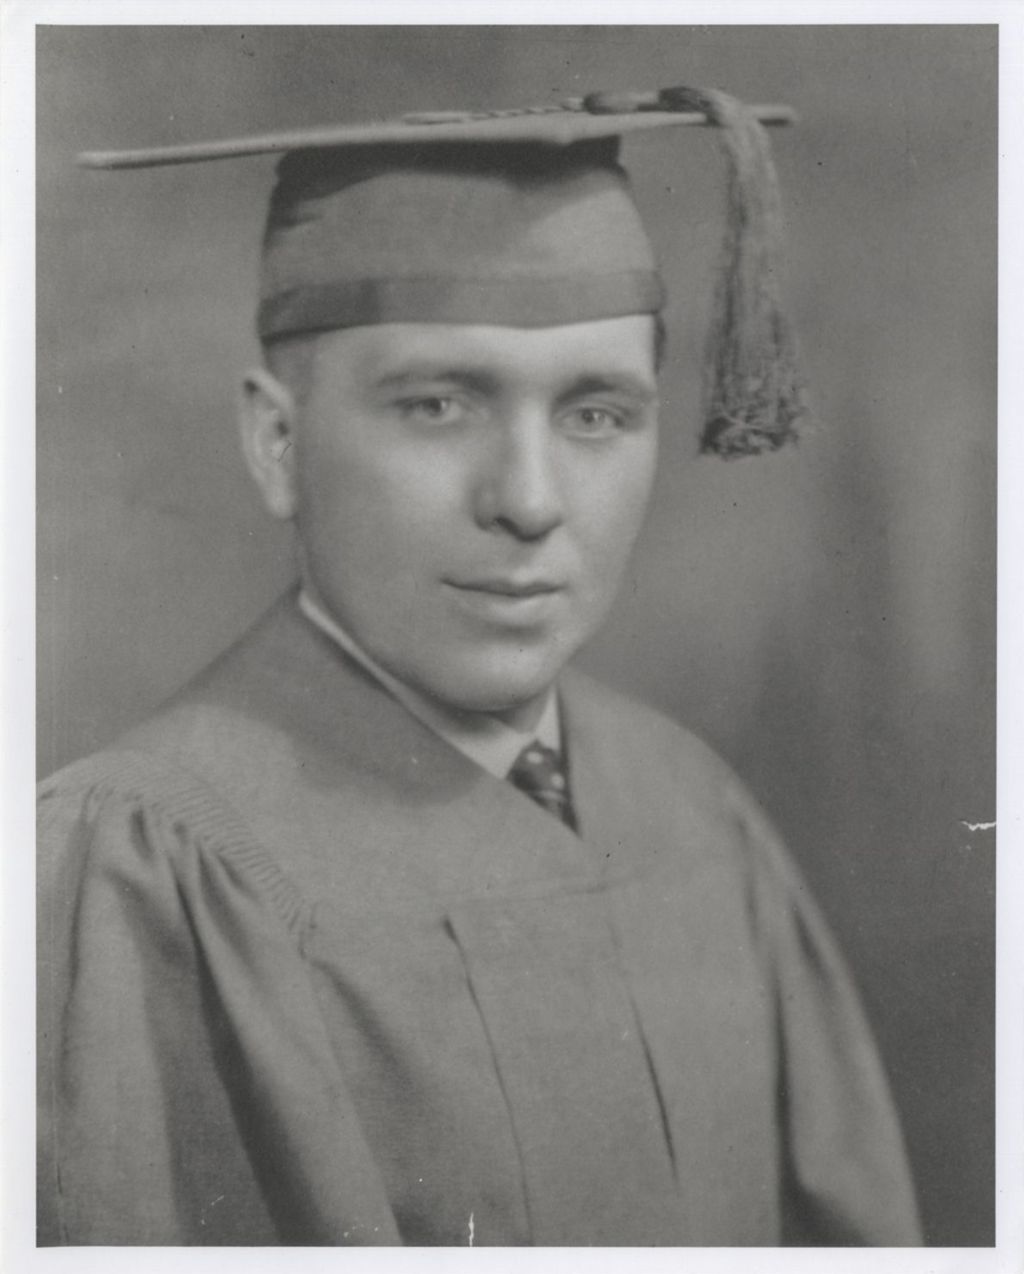 Miniature of Richard J. Daley's Law School graduation portrait